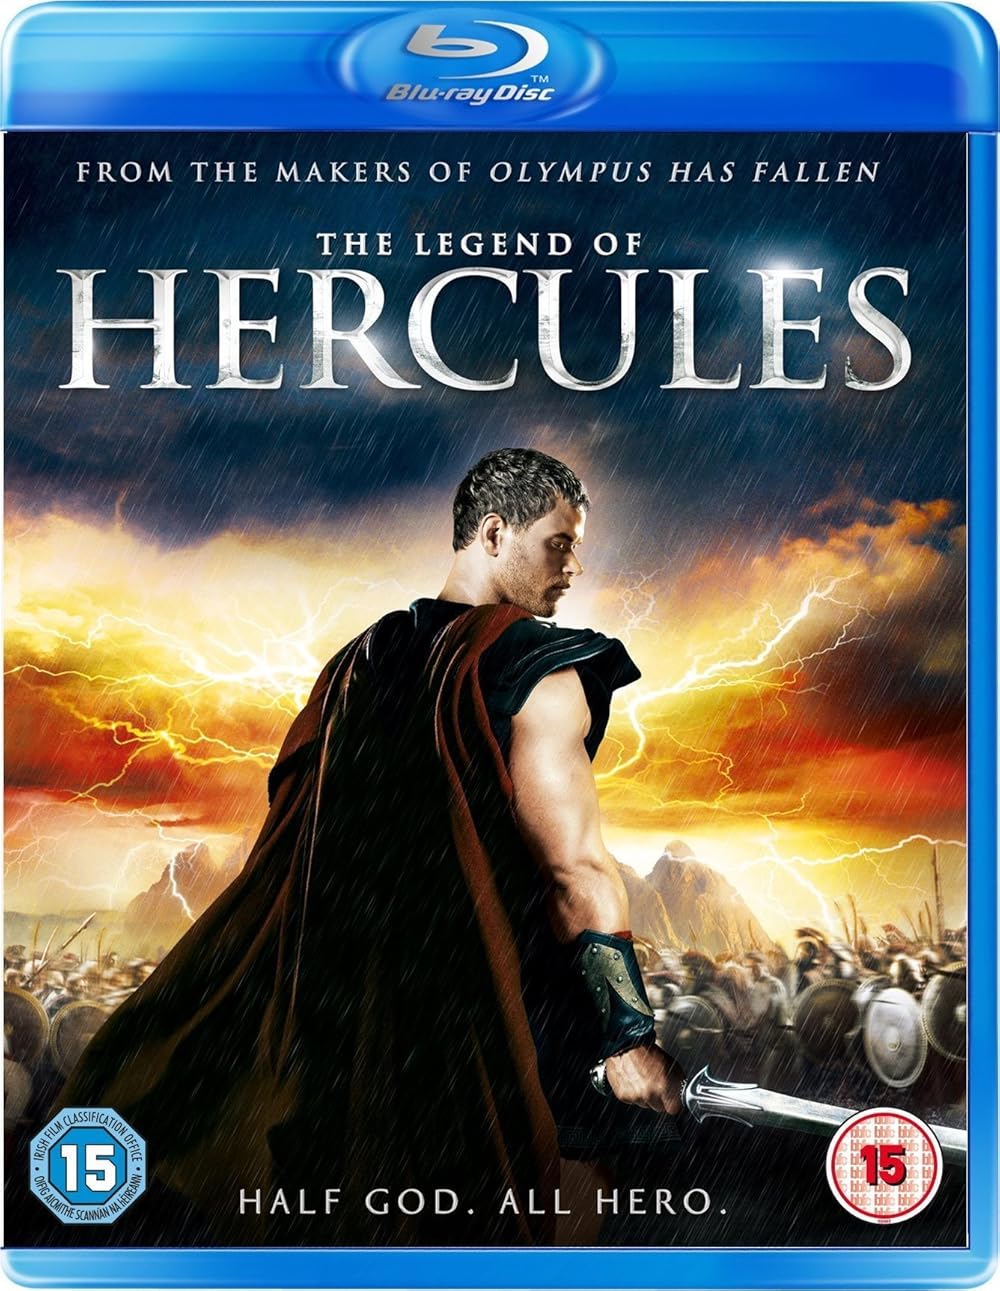 The Legend of Hercules (2014) 4523Kbps 23.976Fps 48Khz BluRay DTS-HD MA 5.1Ch Turkish Audio TAC